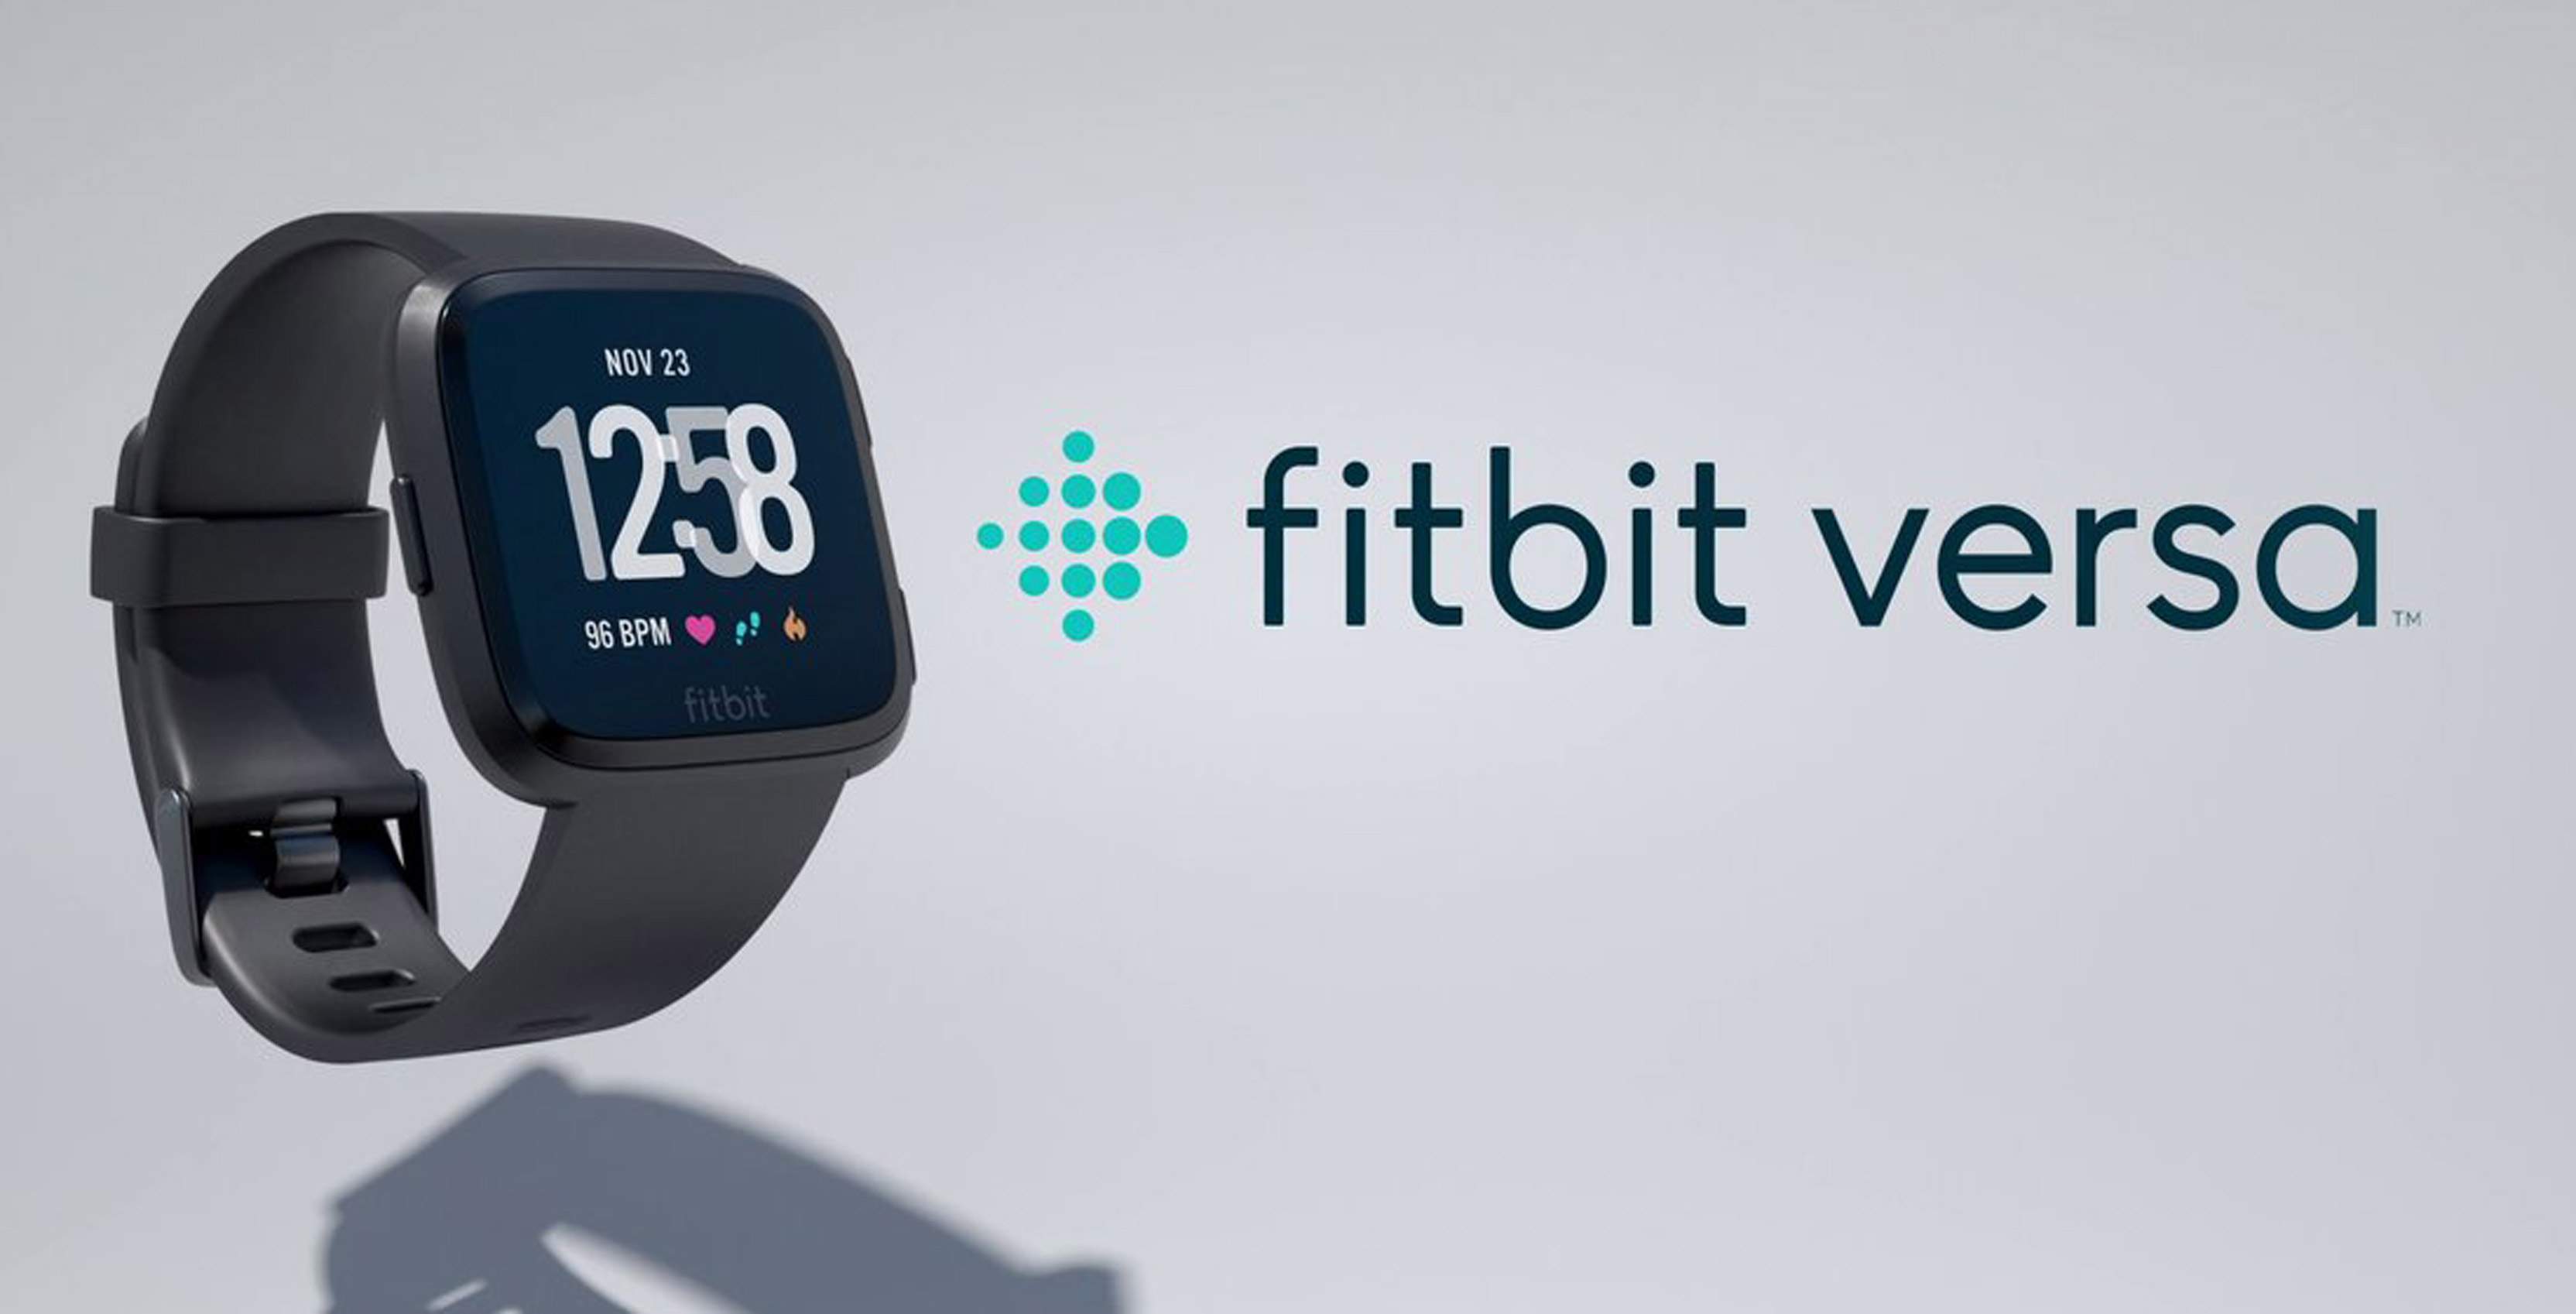 Leaked render of Fitbit's new Versa smartwatch